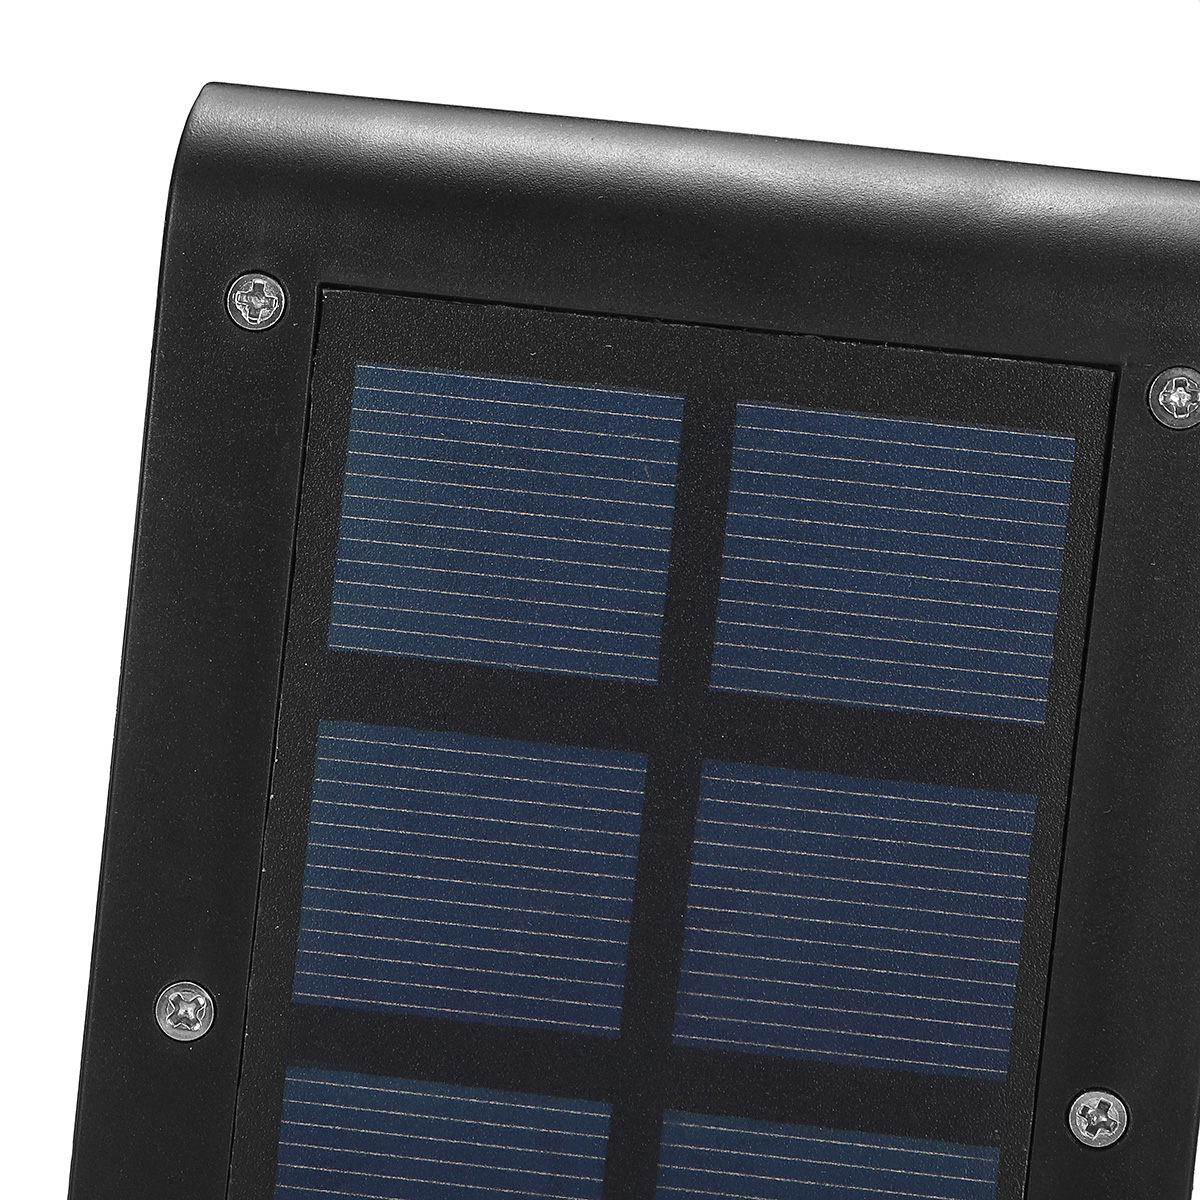 Solar-Powered-5W-8LED-Lighting-Sensor-Waterproof-IP65-Wall-Light-Ourdoor-Garden-Porch-Path-Lamp-1385078